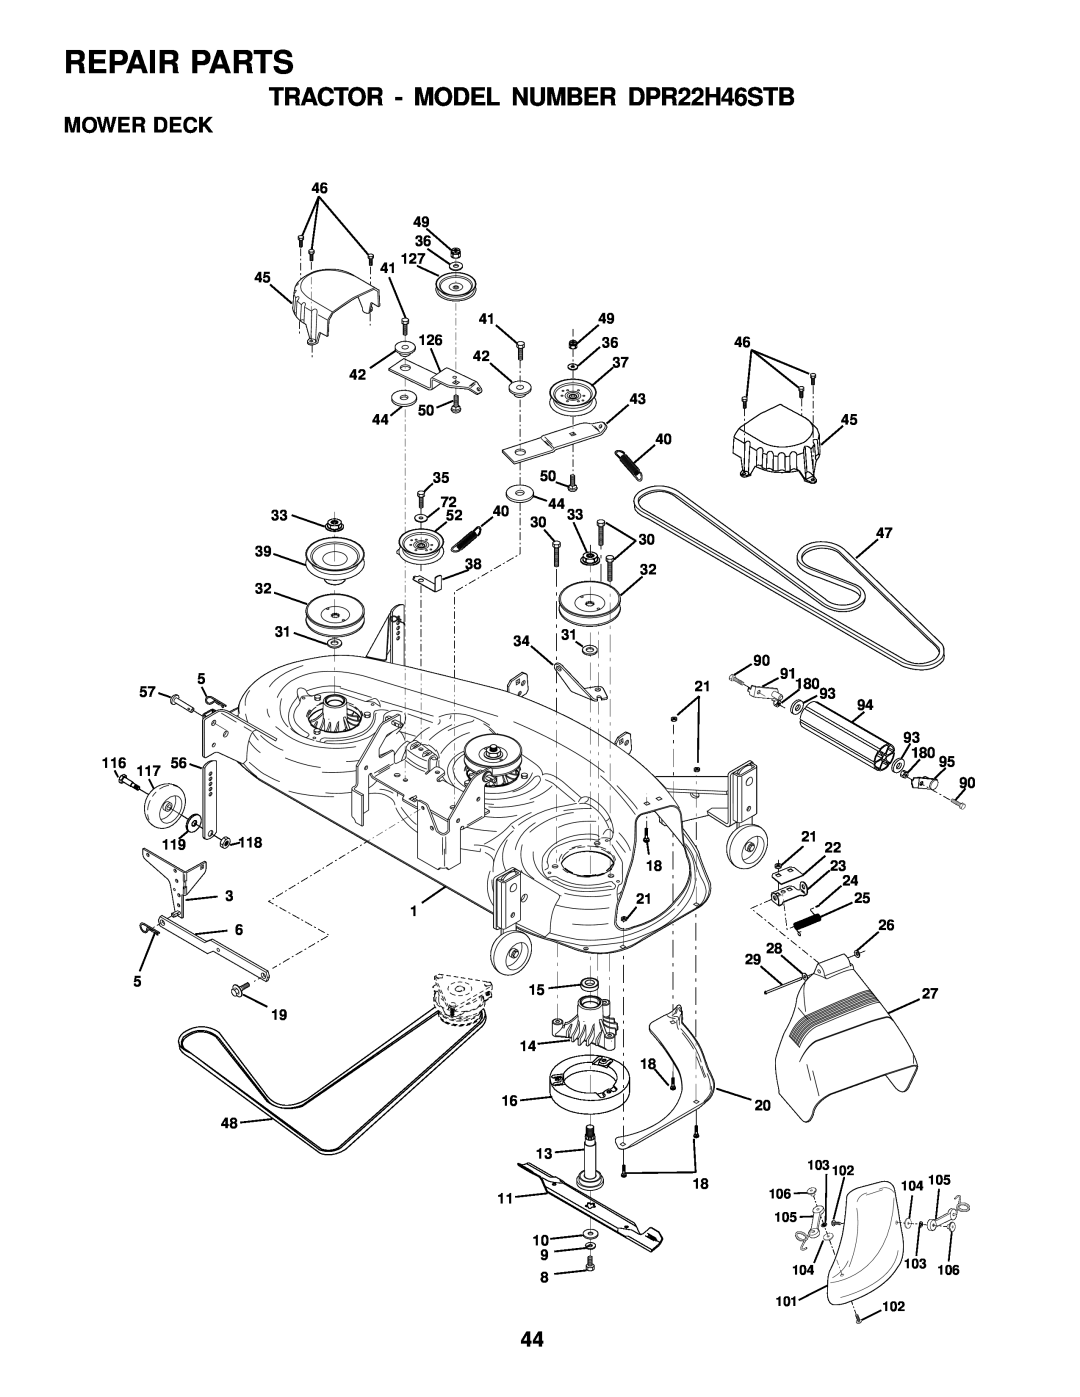 Poulan owner manual Mower Deck, Repair Parts, TRACTOR - MODEL NUMBER DPR22H46STB, 101102 